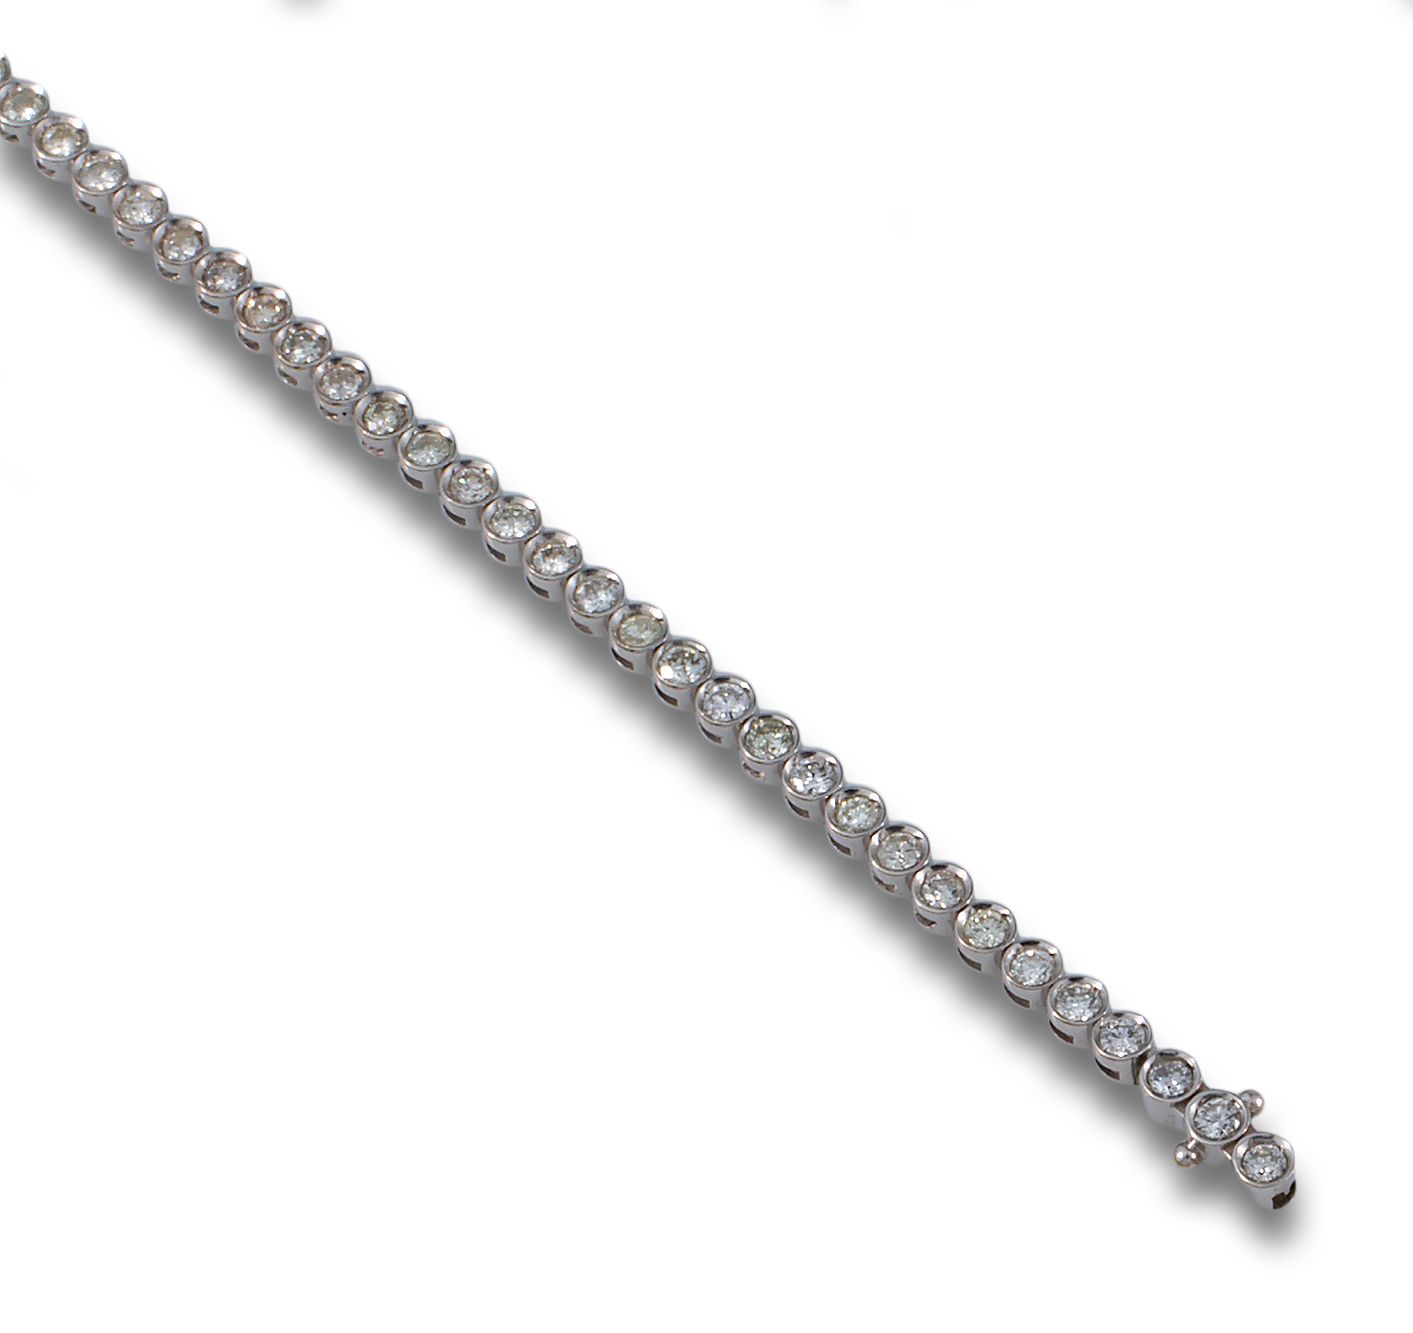 GOLD BRACELET CHATONS DIAMONDS 37 Rivière手镯，18K白金chaton设计，镶嵌明亮式切割钻石 .